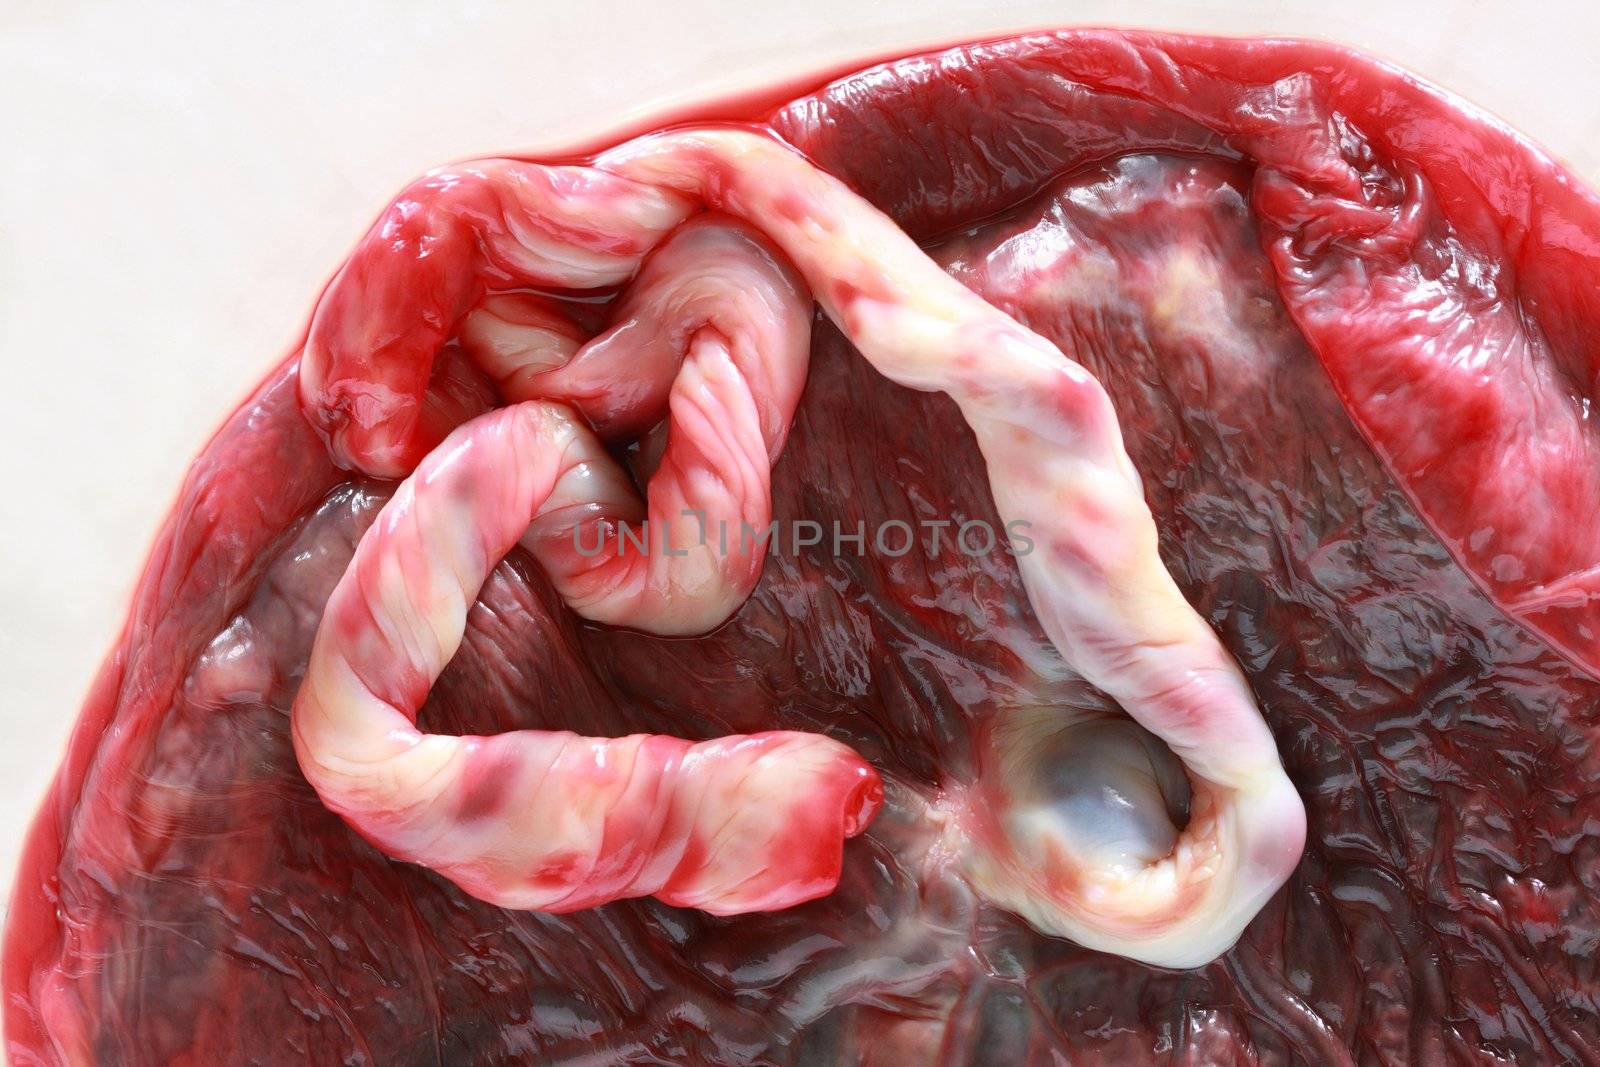 Human Placenta by photosoup